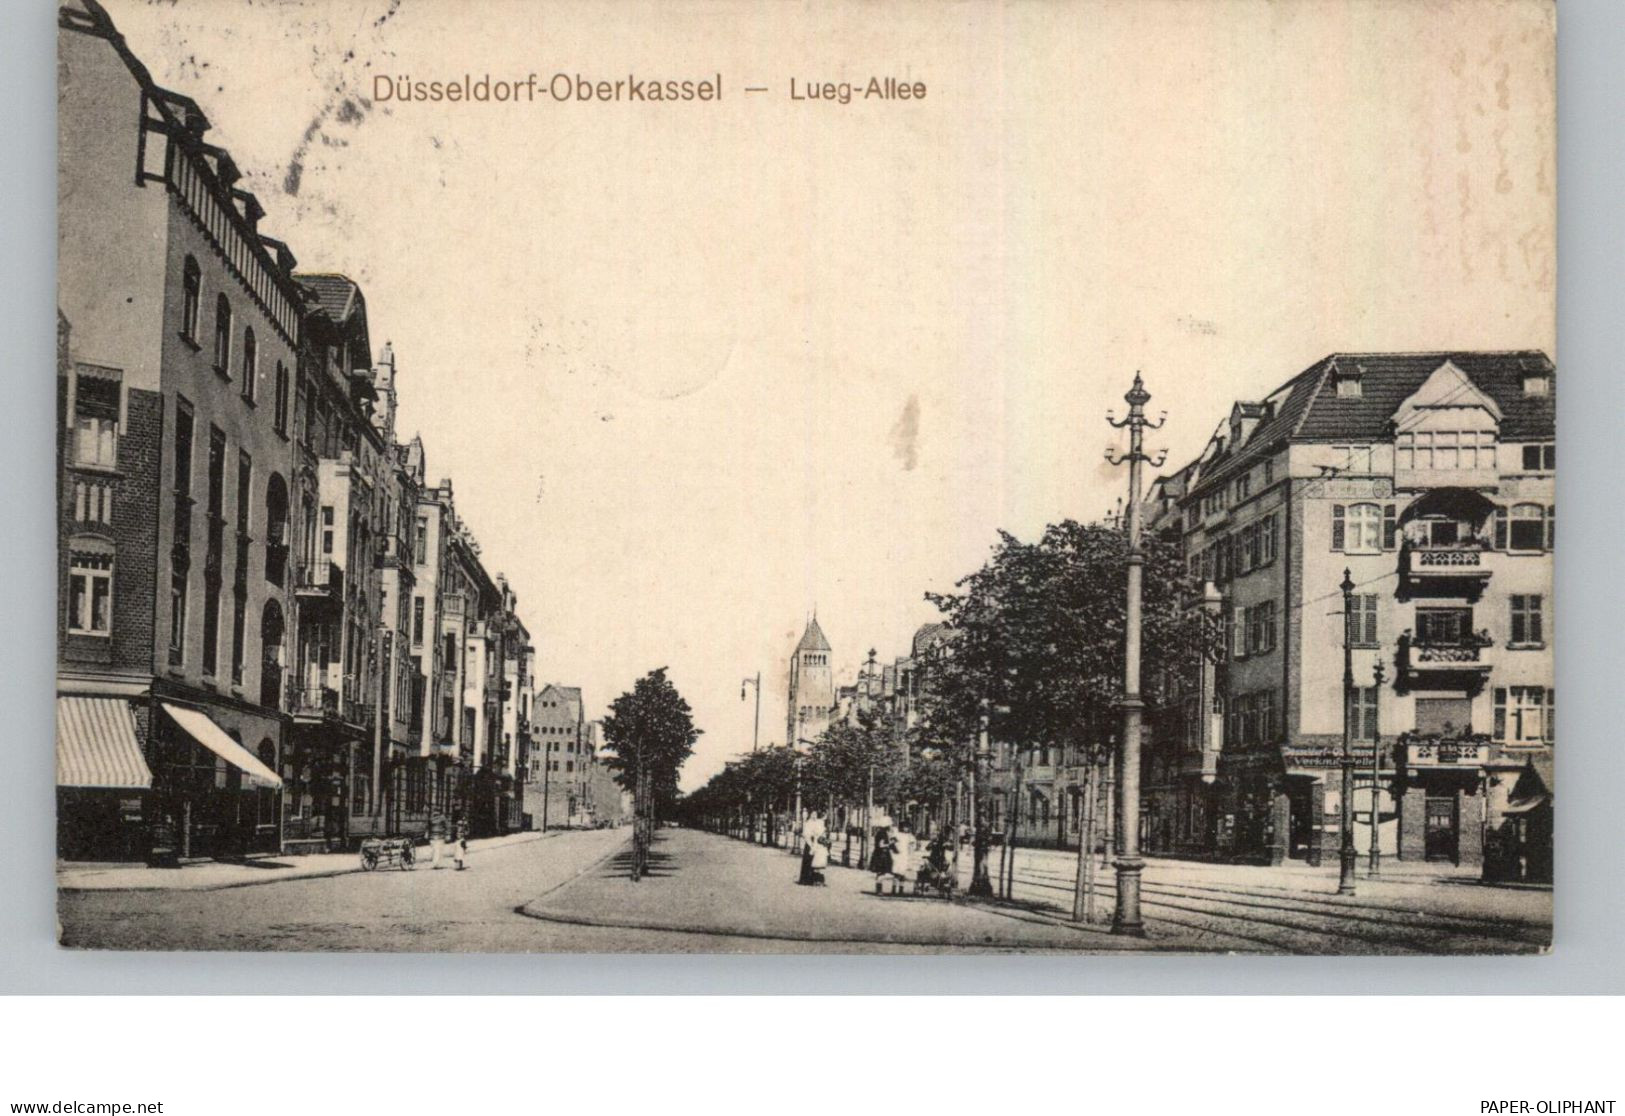 4000 DÜSSELDORF - OBERKASSEL, Lueg - Allee, 1912 - Duesseldorf